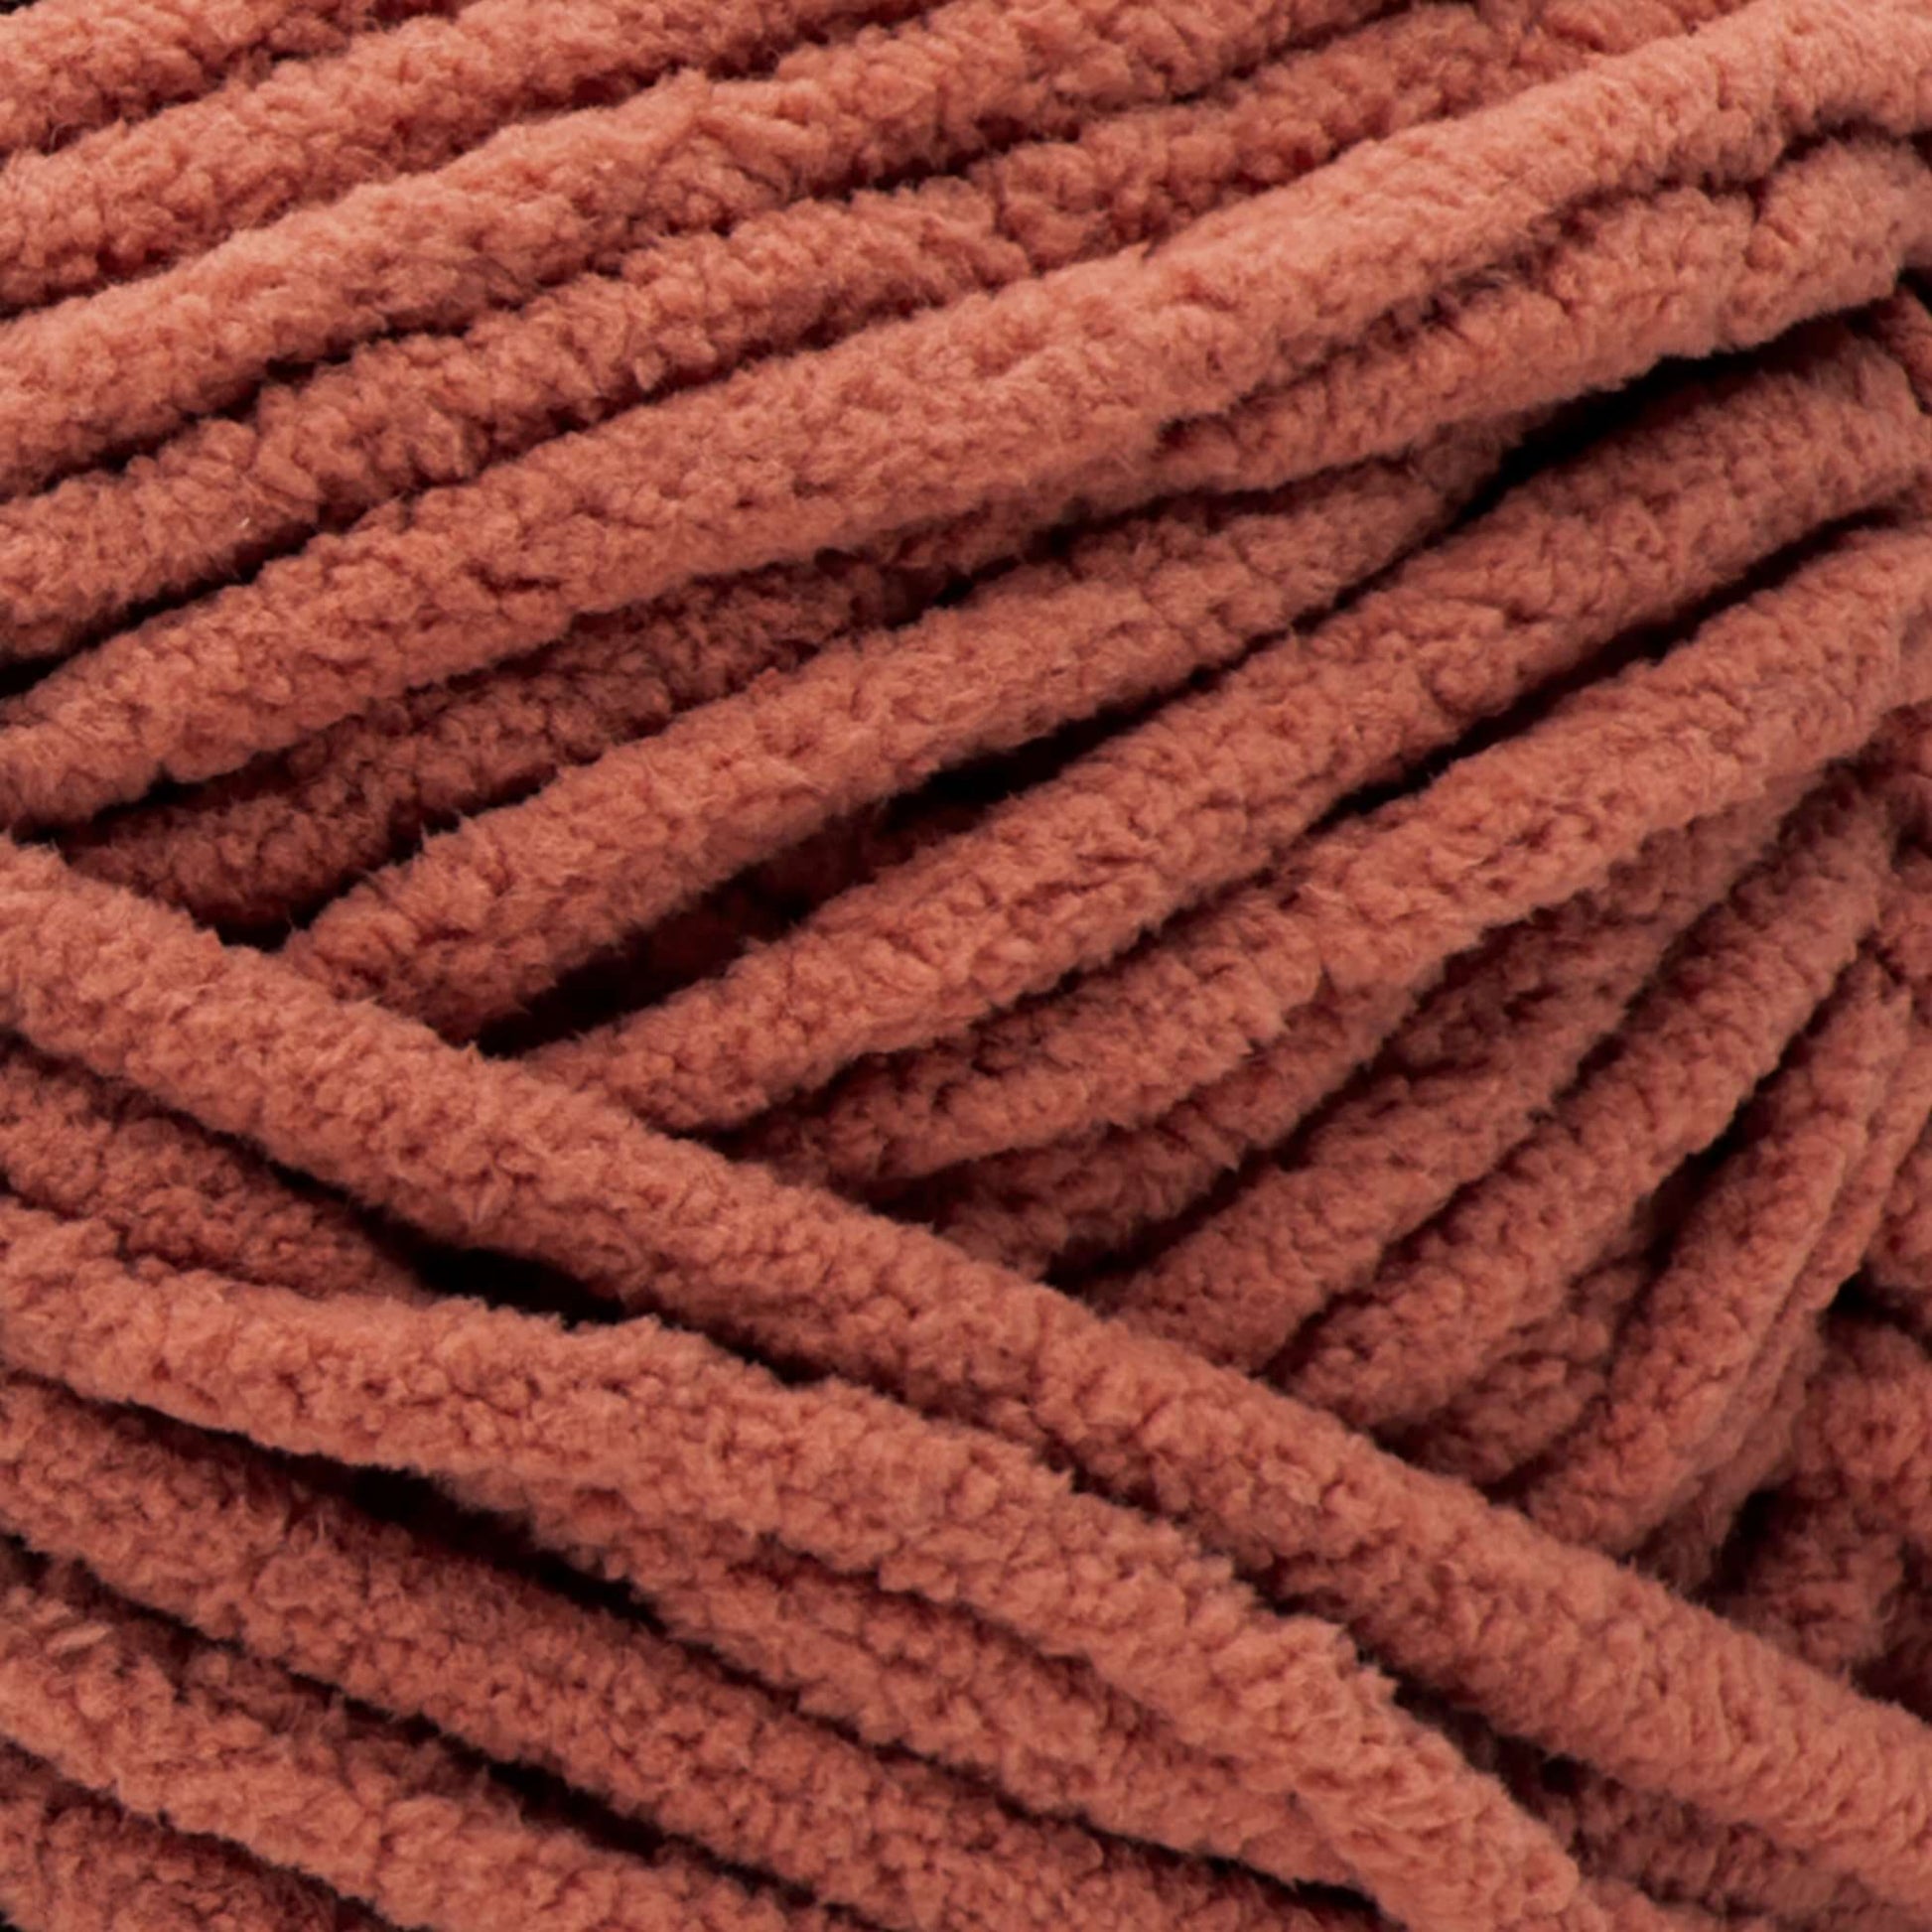 Bernat Blanket Yarn (300g/10.5oz) Red Rust